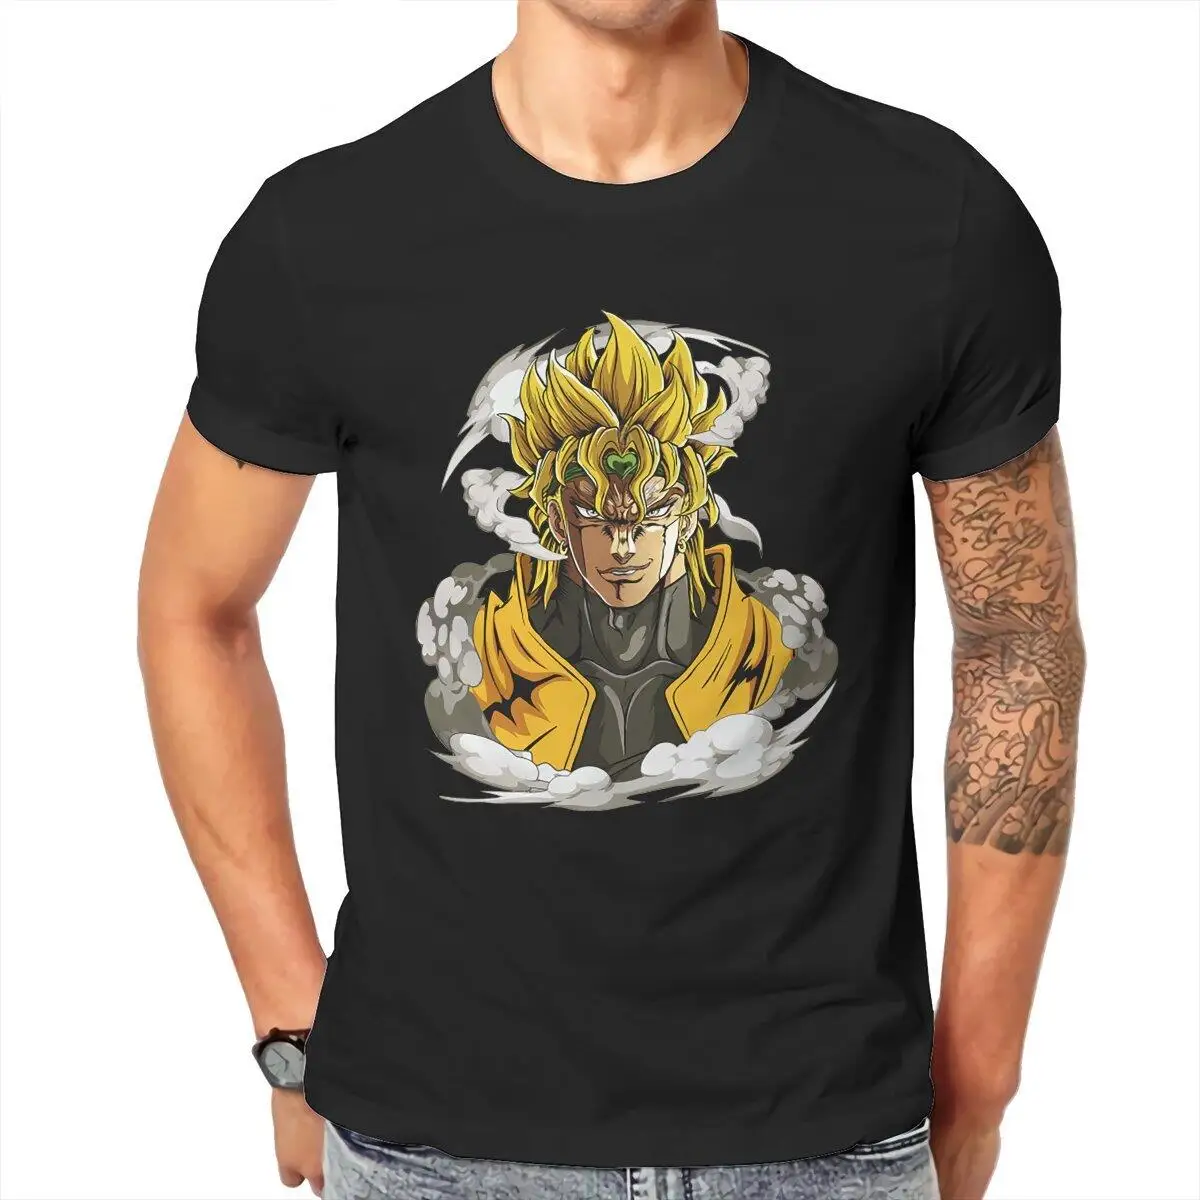 Dio Brando Jojos Bizarre Adventure  T Shirt for Men 100% Cotton Vintage T-Shirts  Japanese Anime Manga Tee Shirt Clothing 6XL